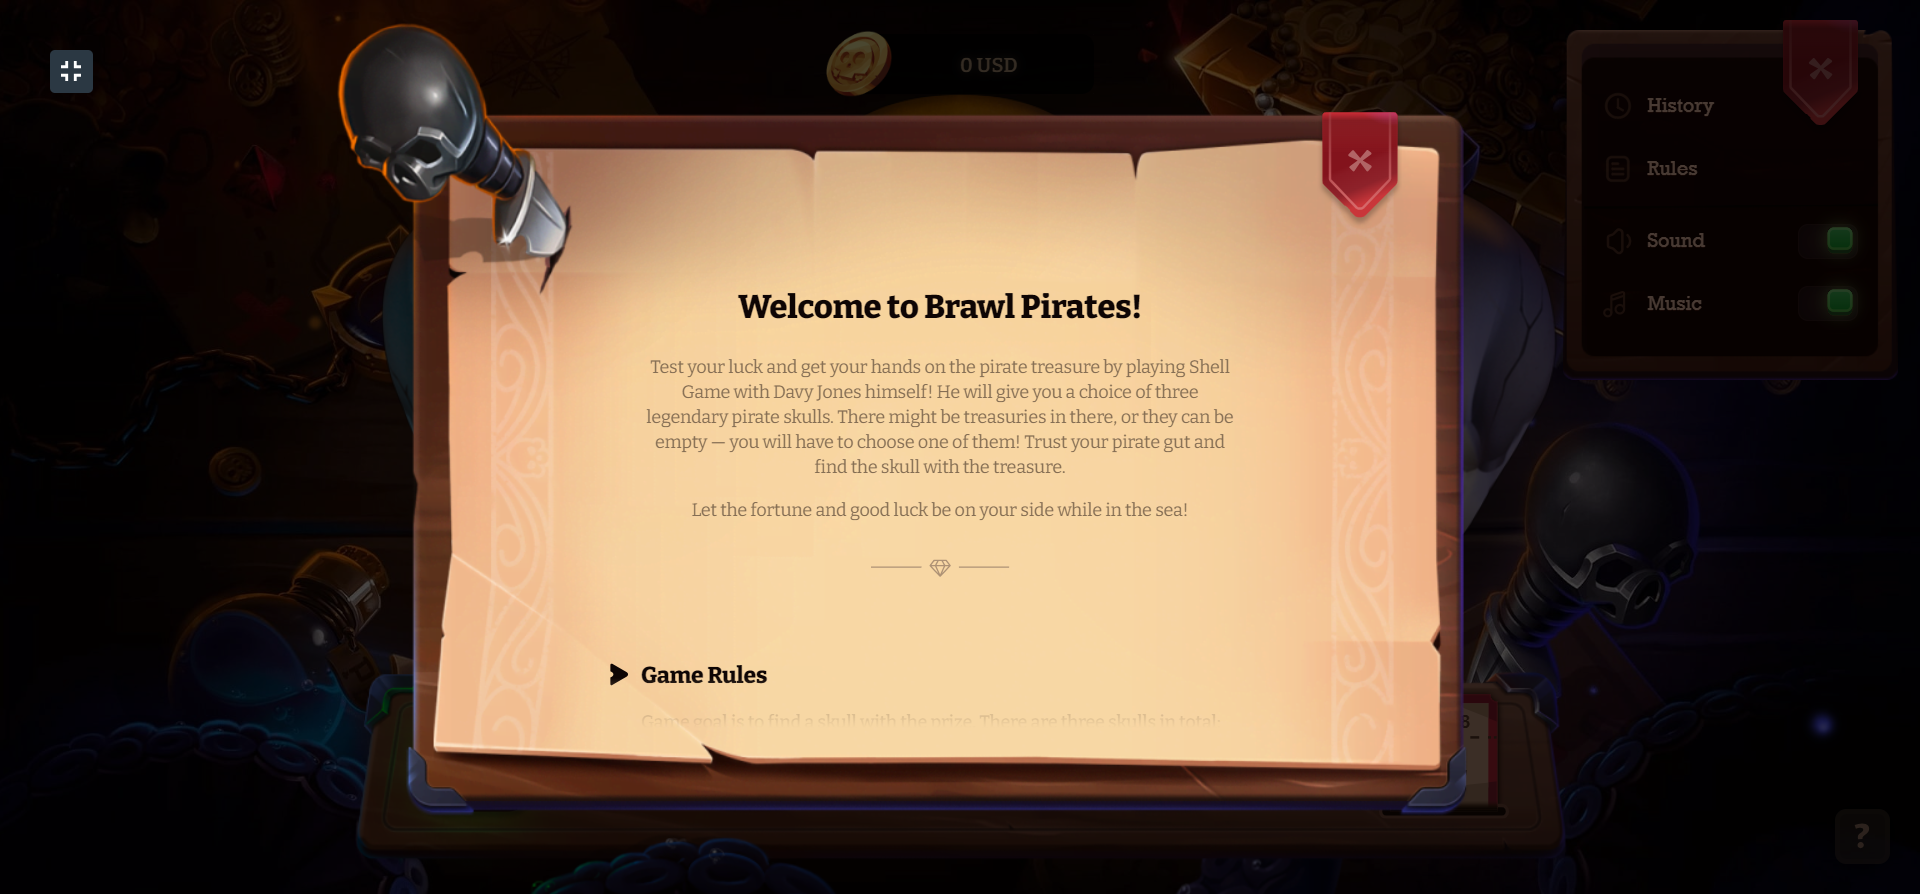 1win Brawl Pirates